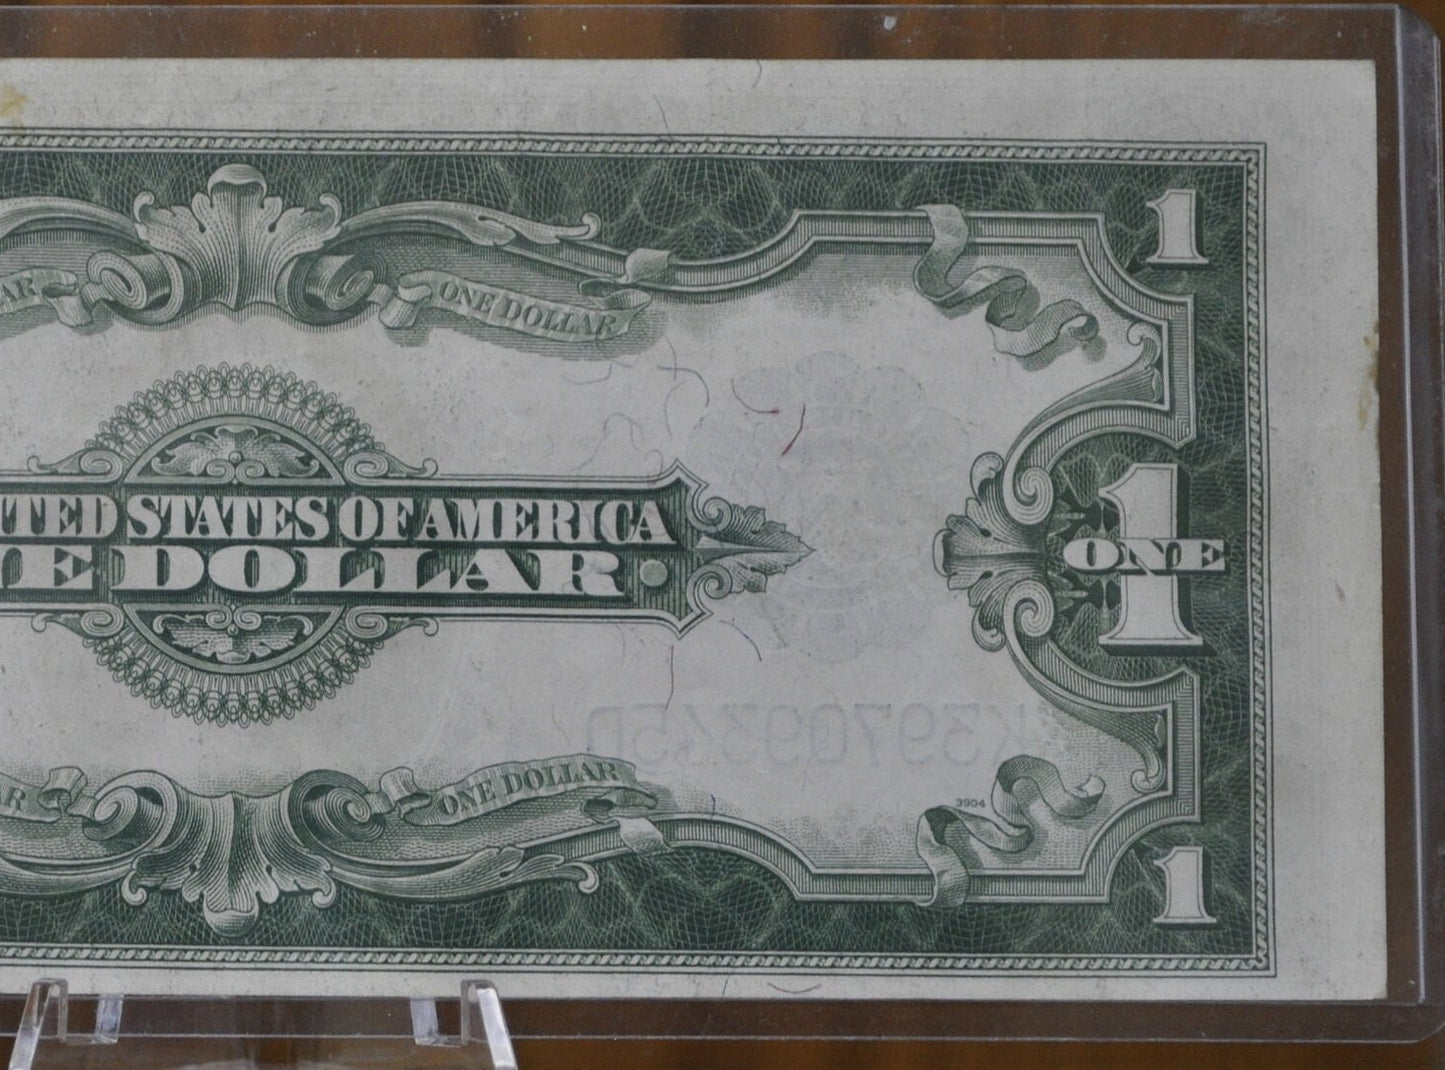 1923 Silver Certificate Horseblanket Note 1 Dollar Bill - AU (About Uncirculated) - Crisp, Clean, Blue Seal - 1923 Silver Cert - Fr.237